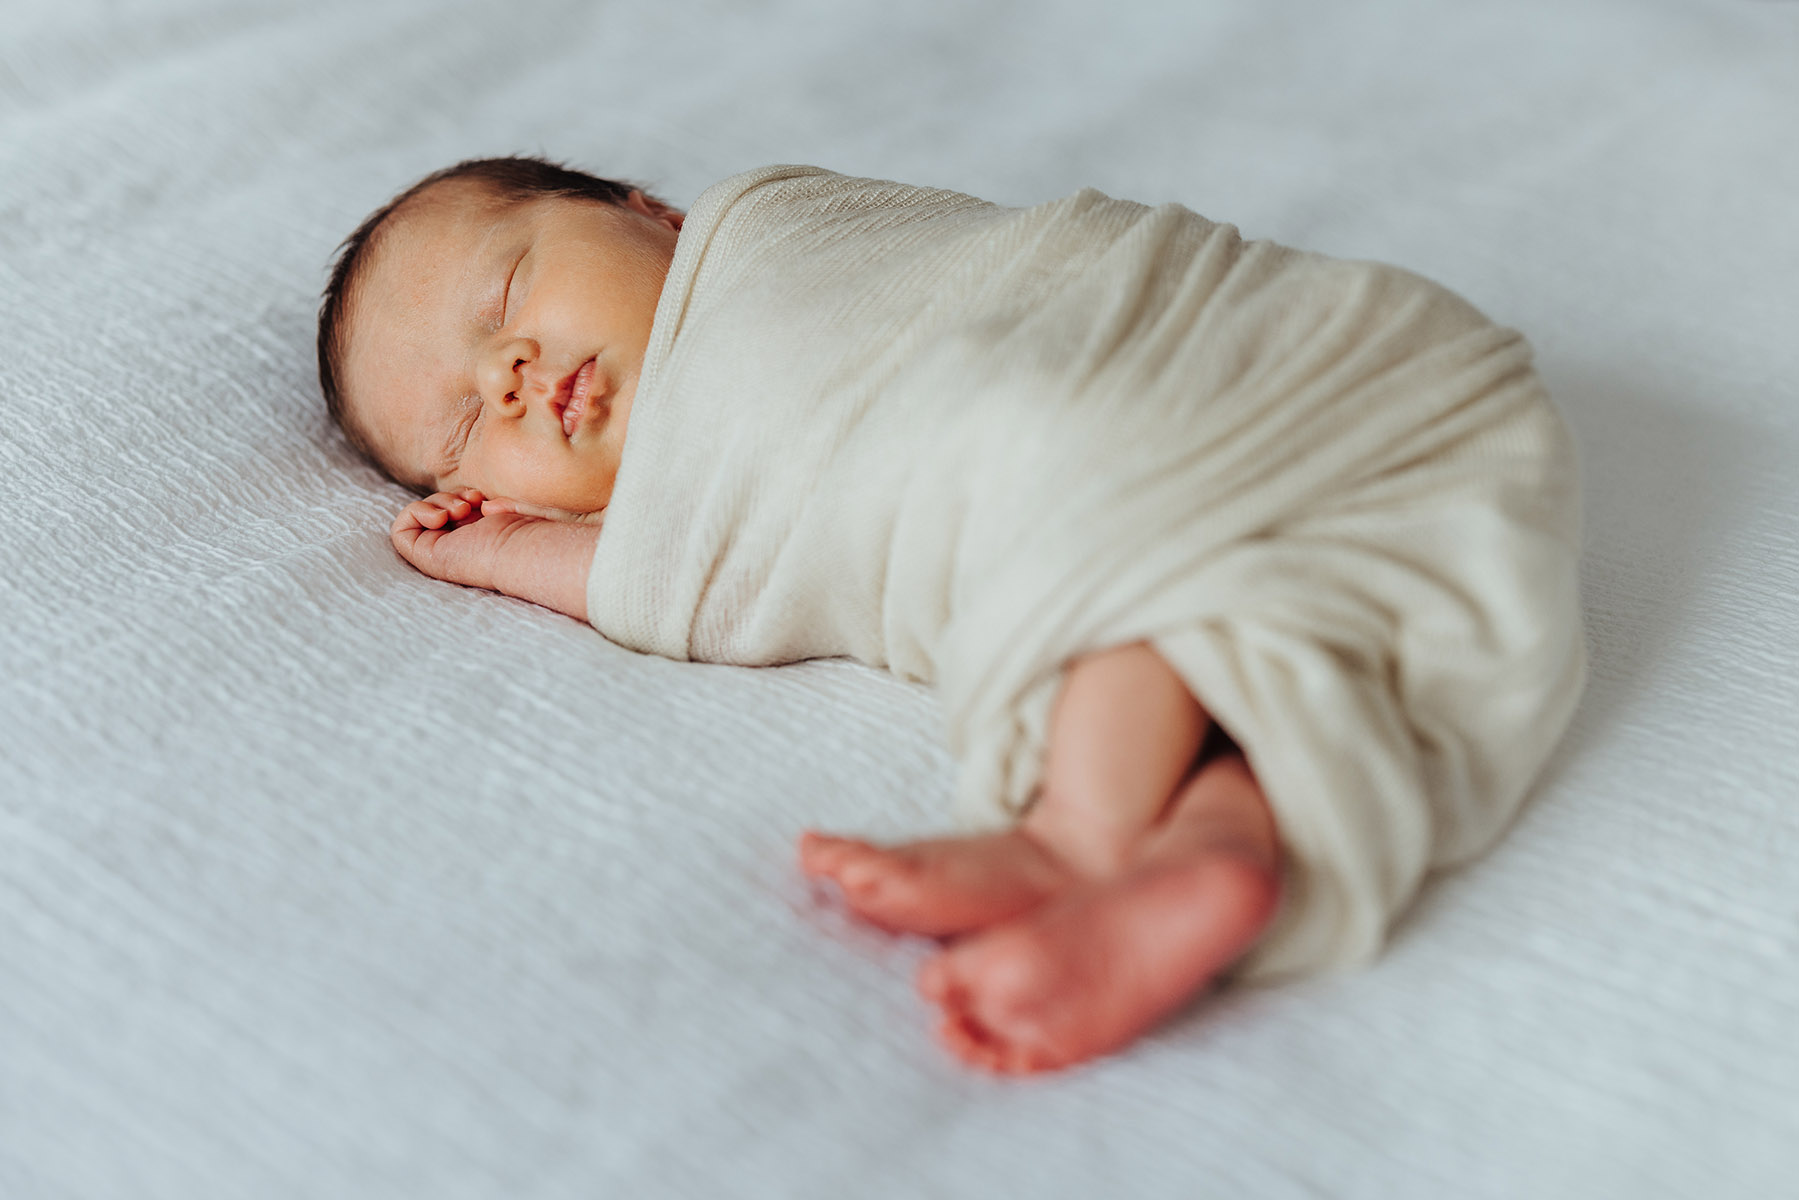 sleeping newborn on white bed sheet